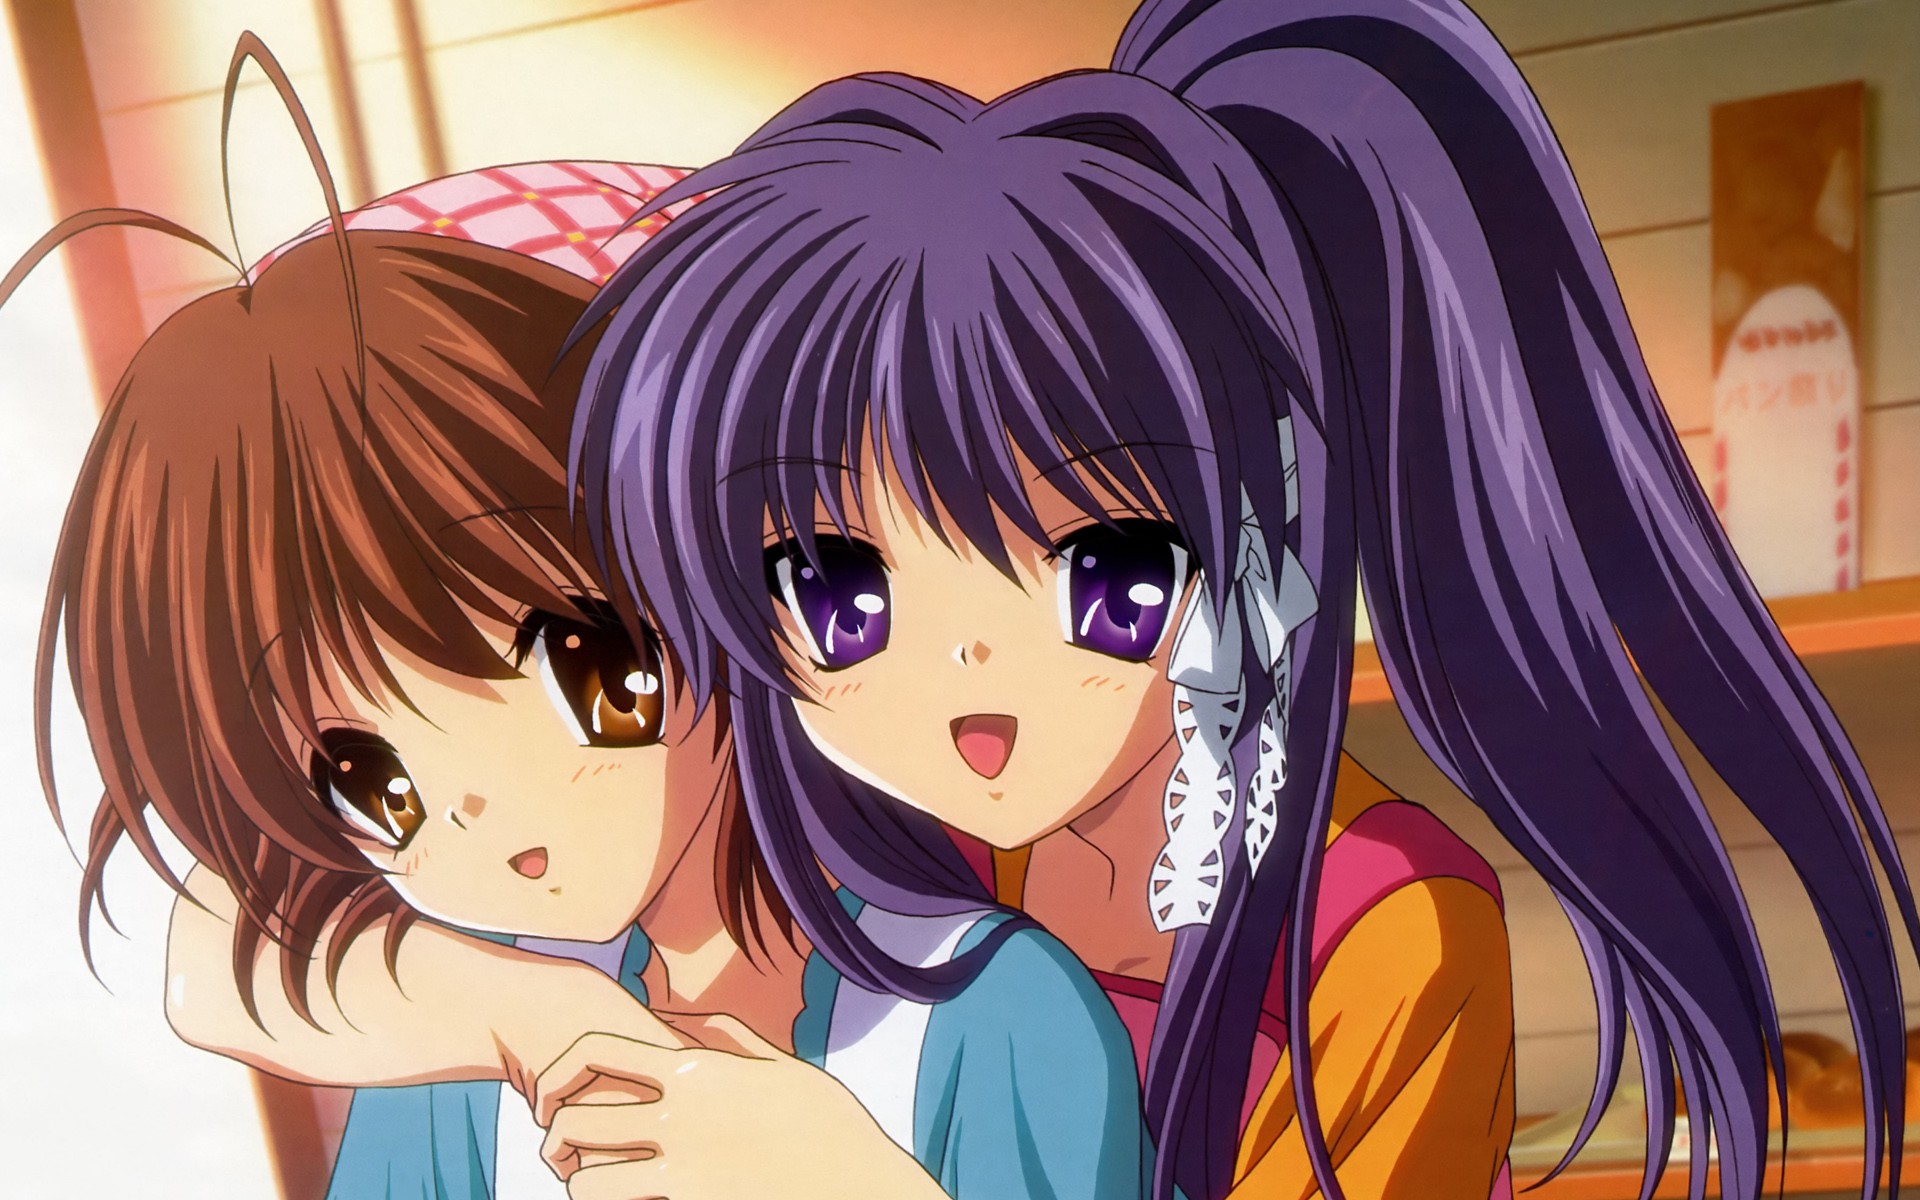 Anime 1920x1200 anime girls anime Clannad Furukawa Nagisa Fujibayashi Kyou hugging portrait two women purple hair brunette brown eyes purple eyes